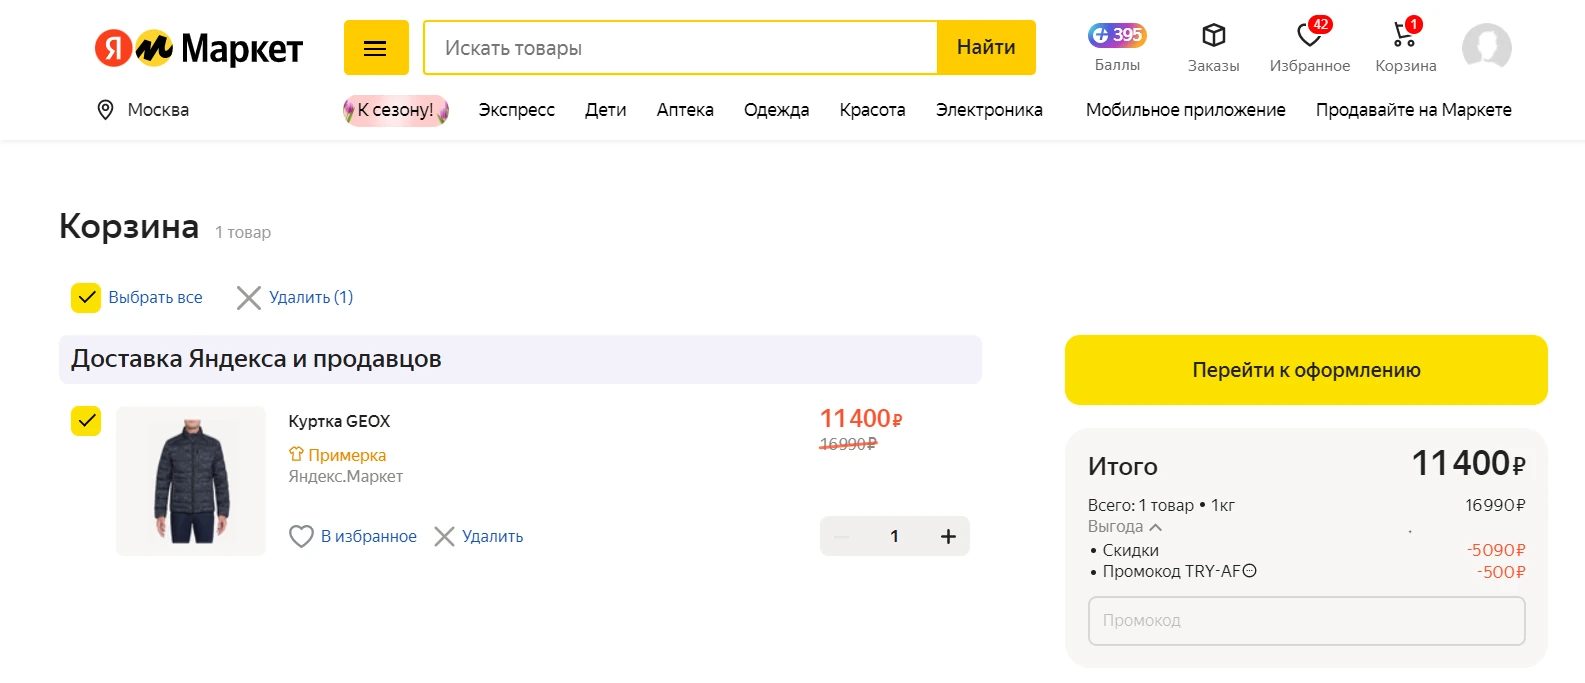 Скидка по промокоду на Яндекс.Маркете